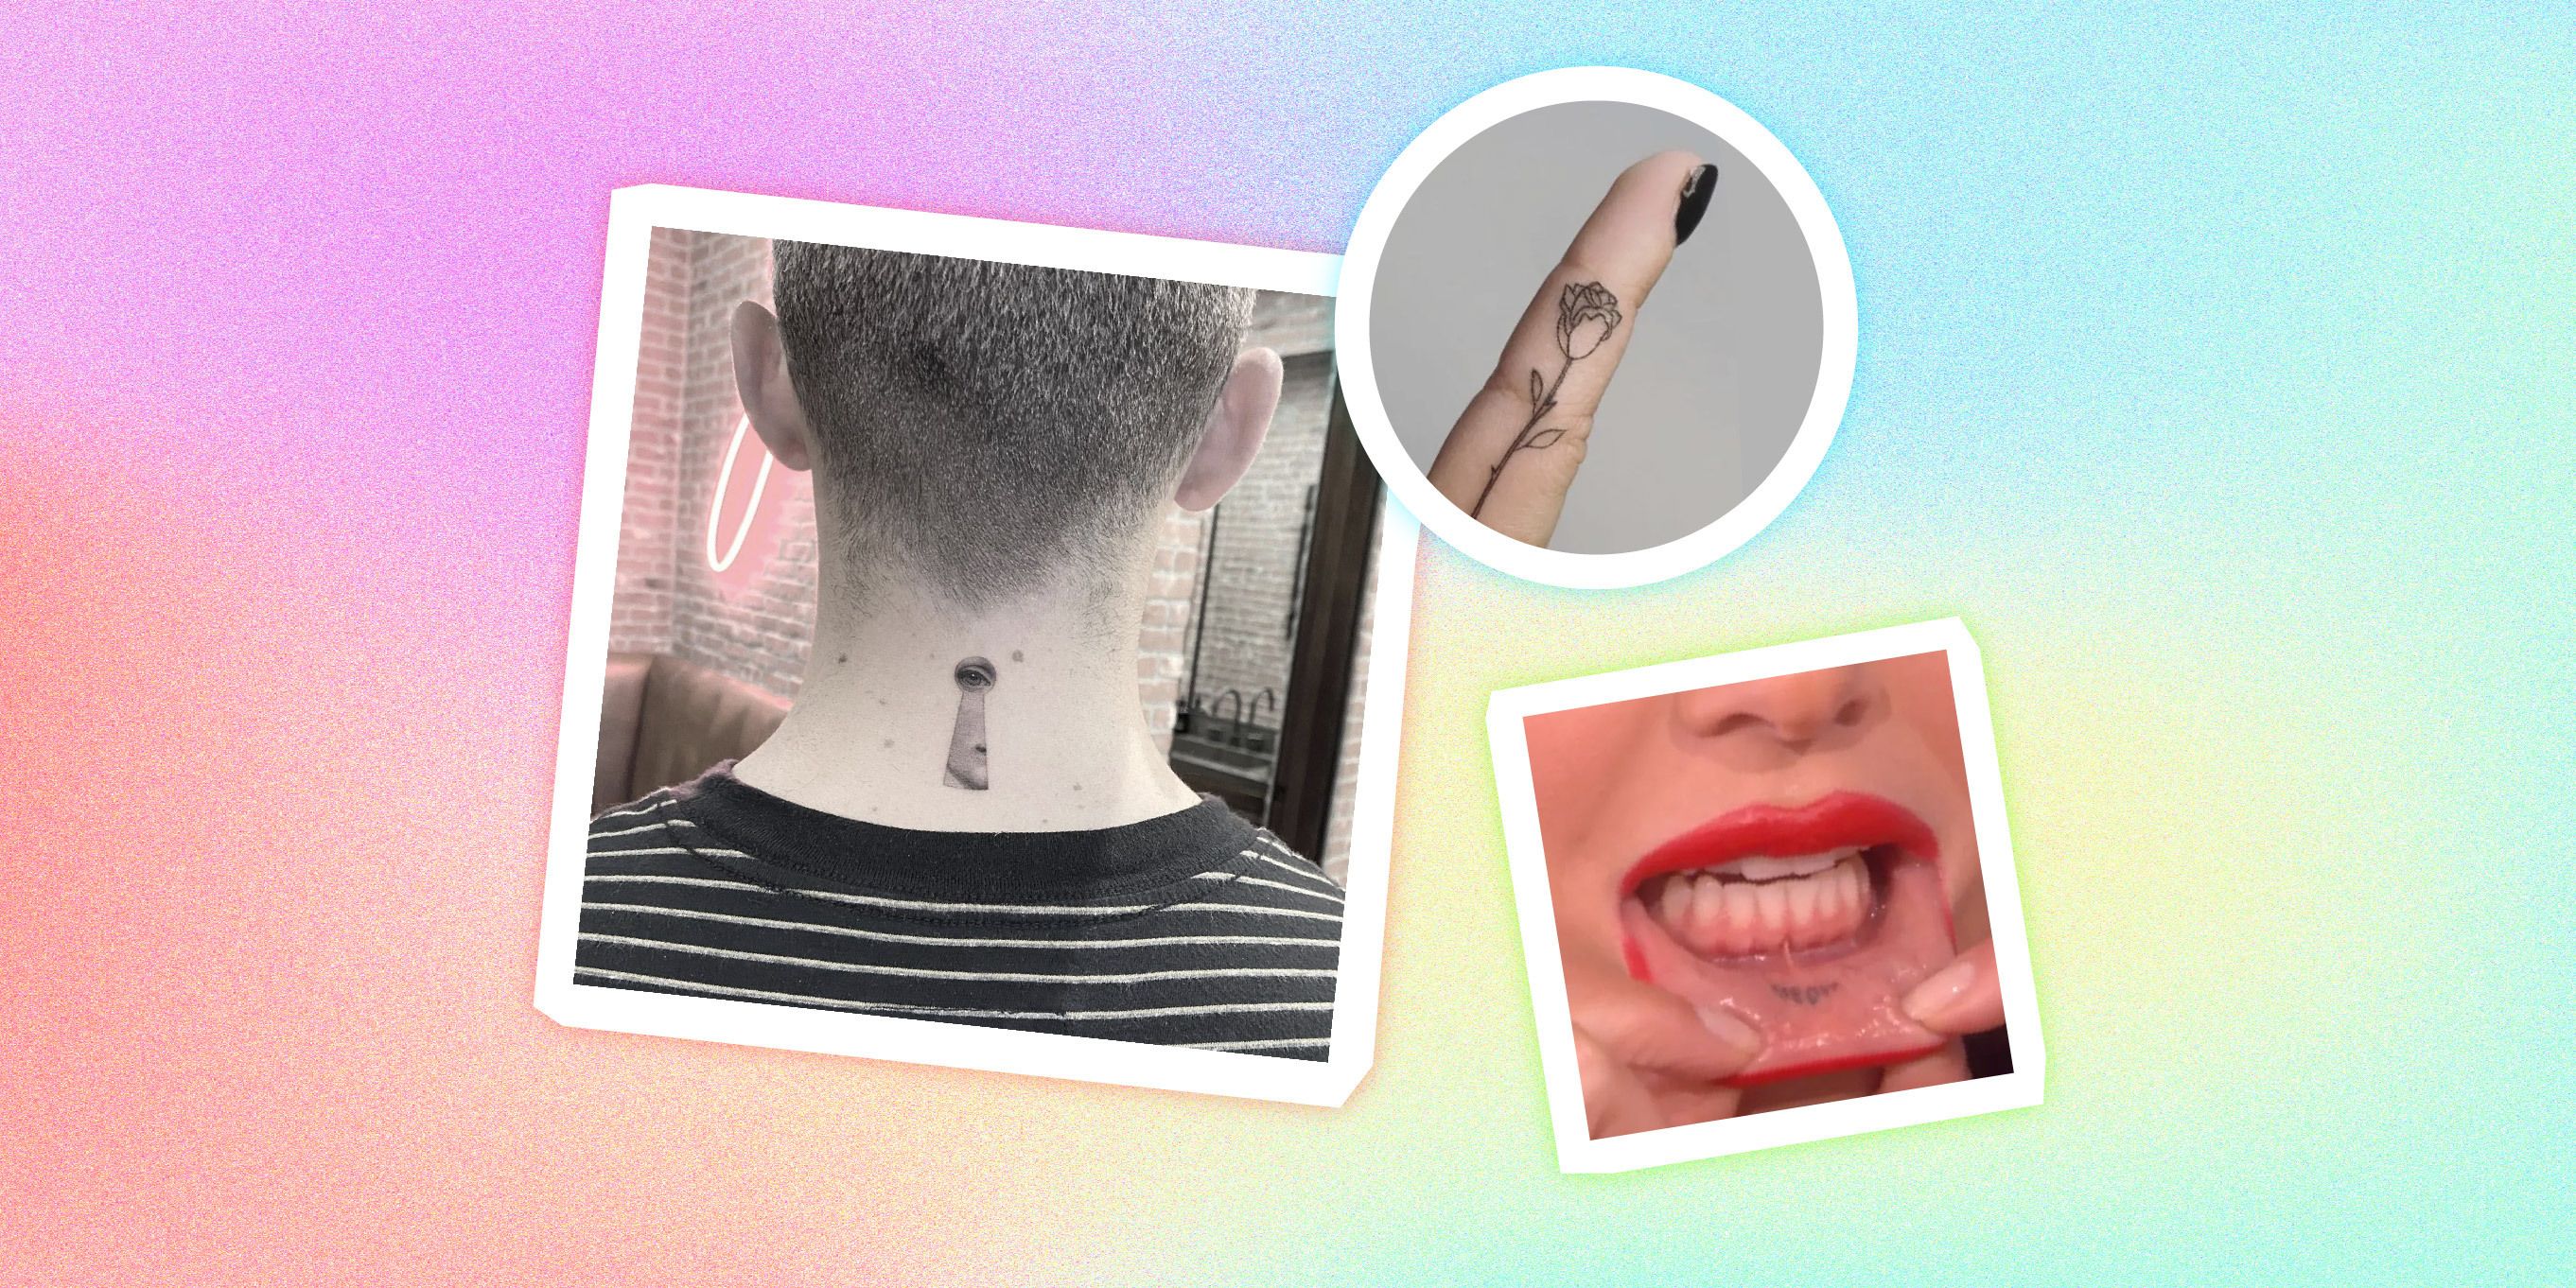 80+ Celebrity Tattoos We Love - Cool Celeb Tattoo Ideas Inspo